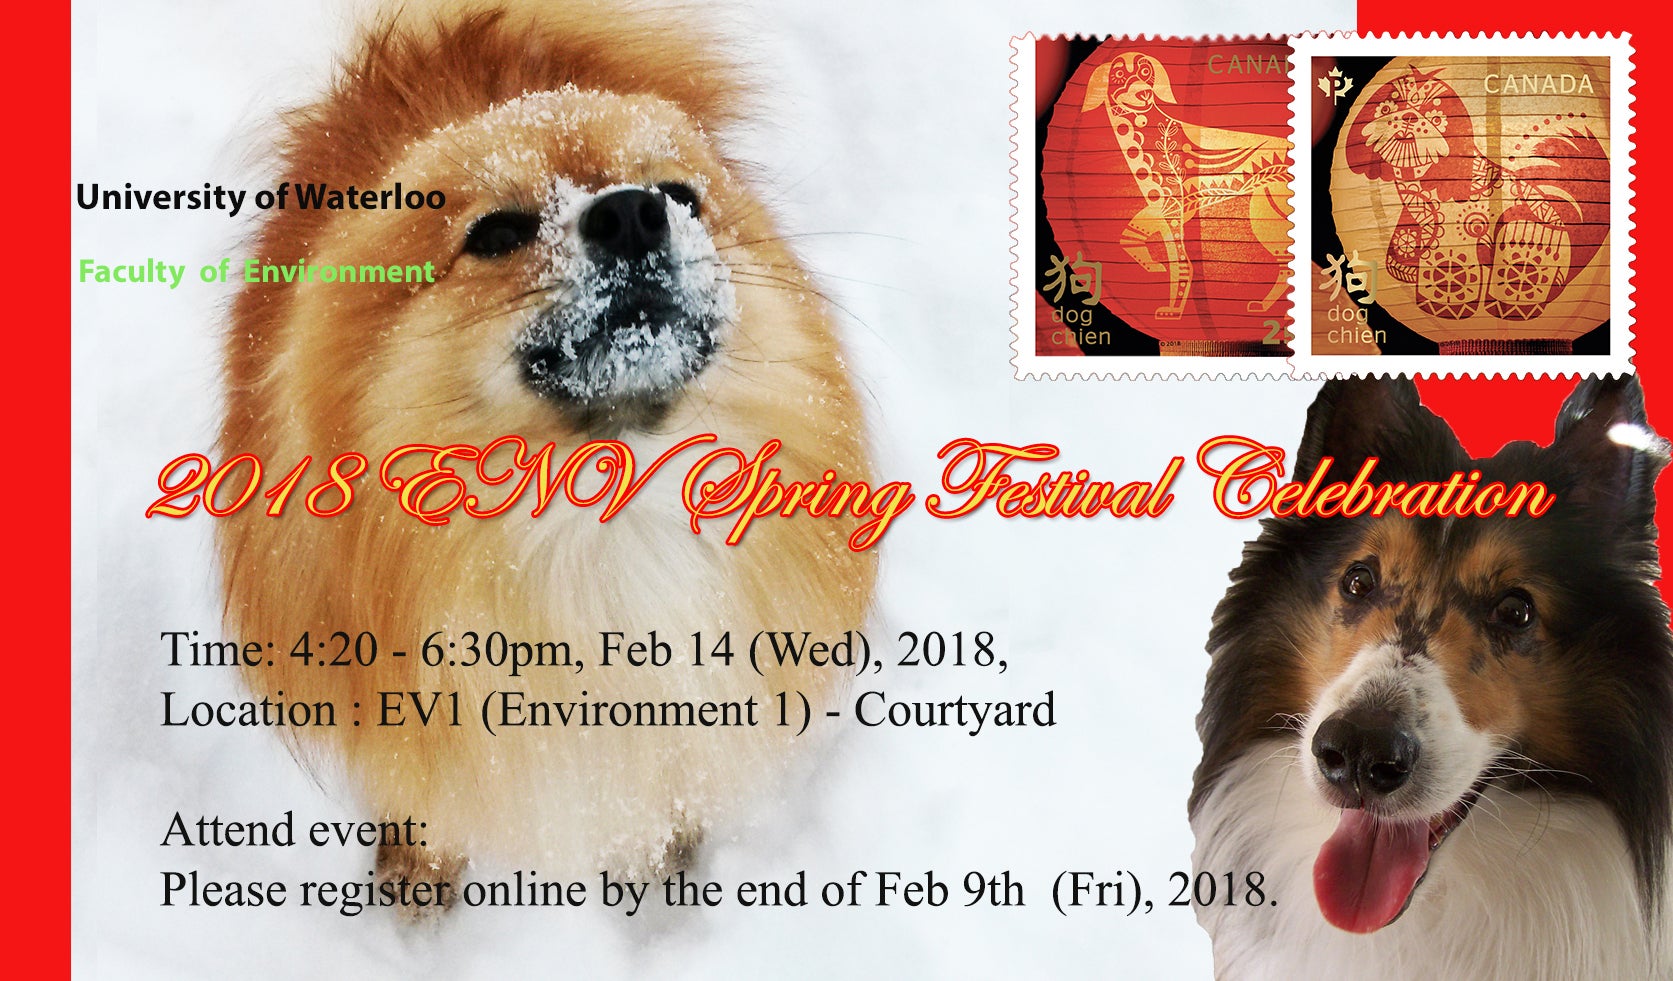 2018 ENV Spring Festival Celebration